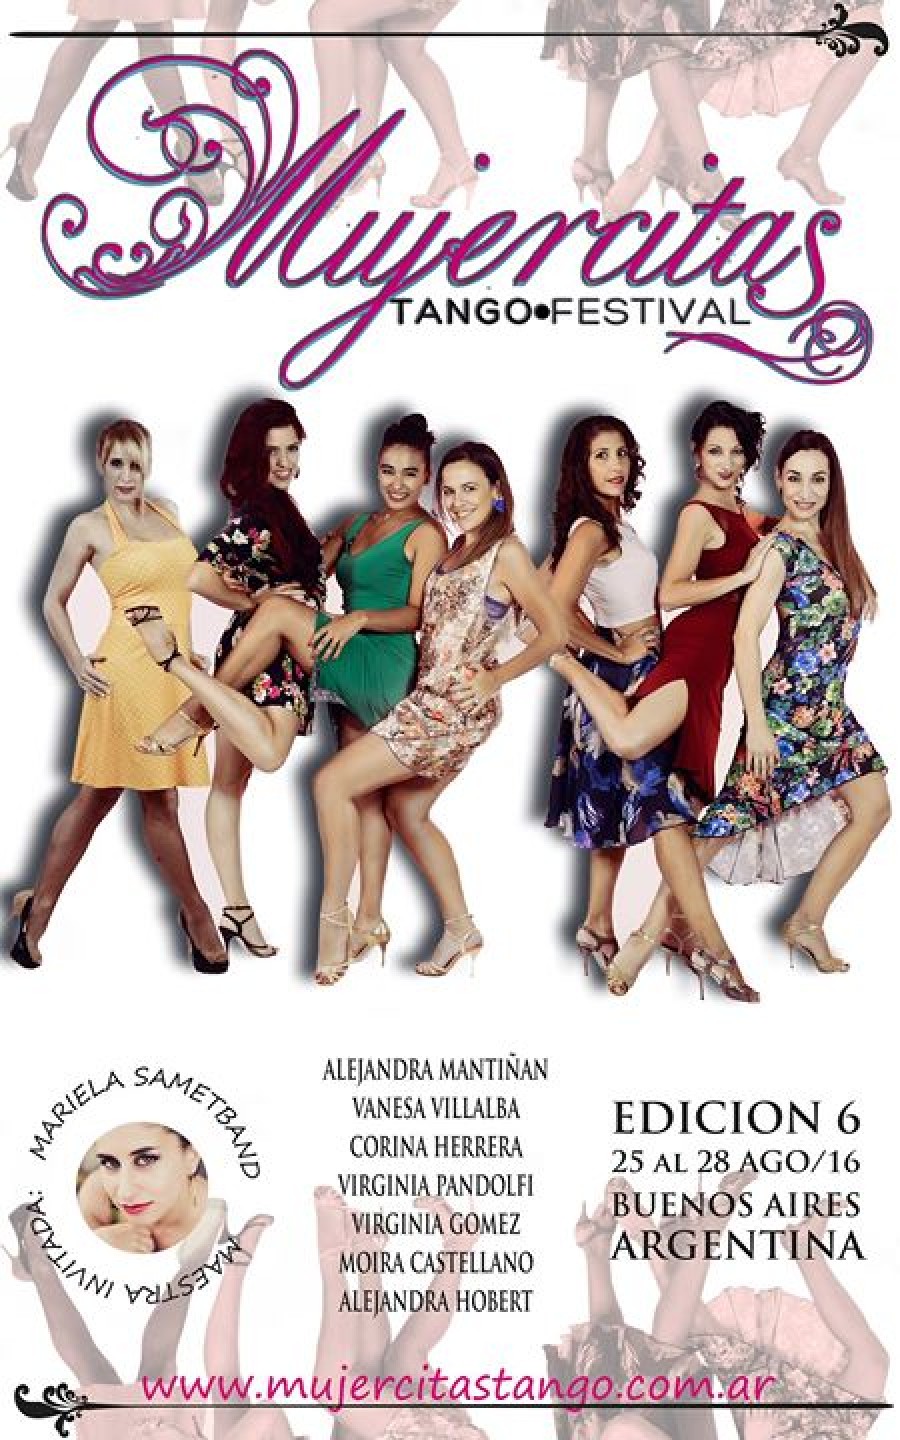 Mujercitas Tango Festival